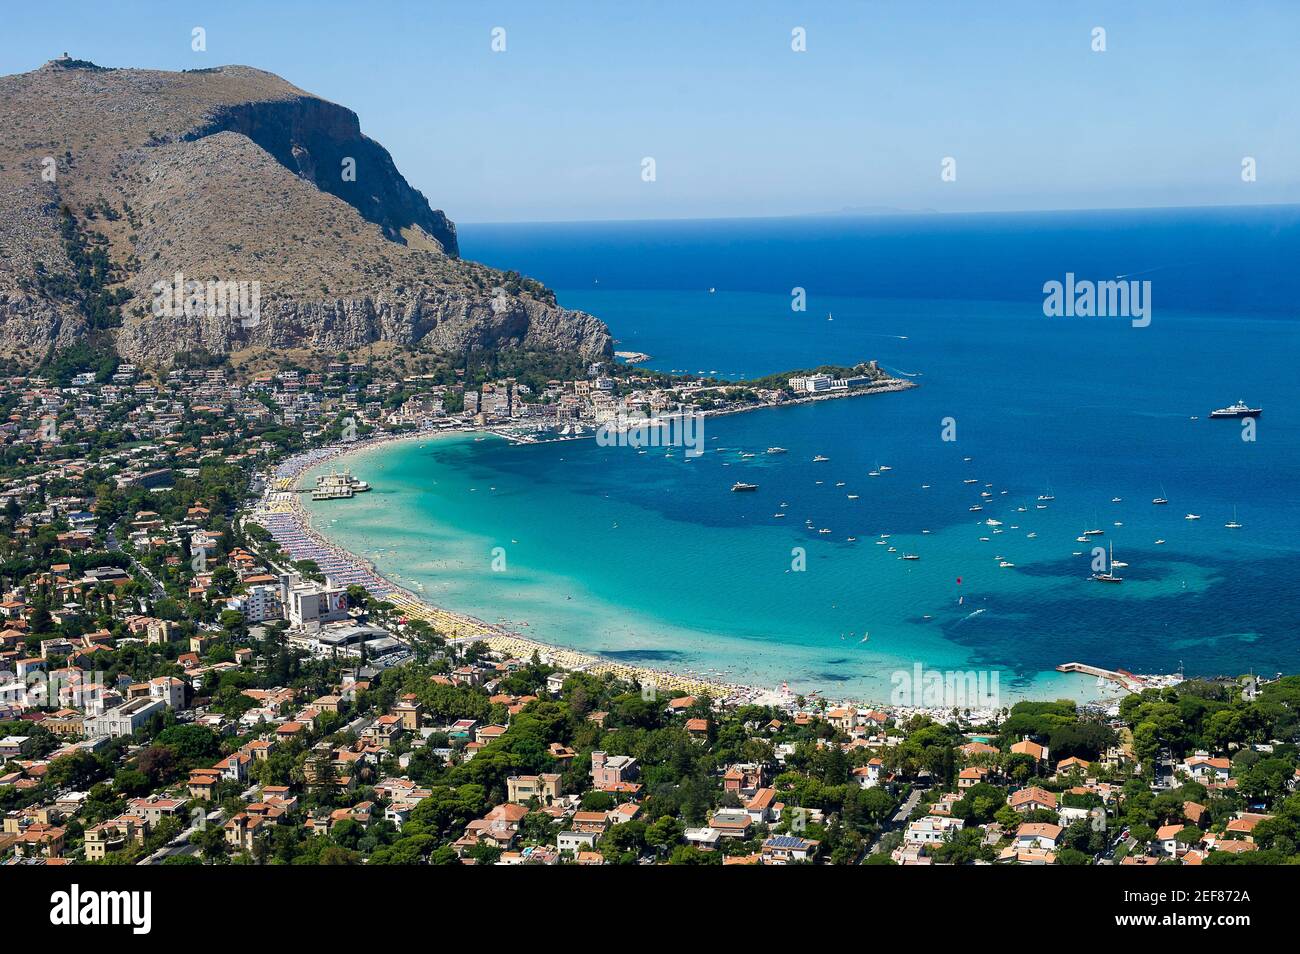 Europe, Italy, Sicily, Palermo, Mondello beach enclosed in Monte Gallo and Monte Pellegrino. Beach, sea, Mediterranean Sea, the Tyrrhenian Sea Stock Photo